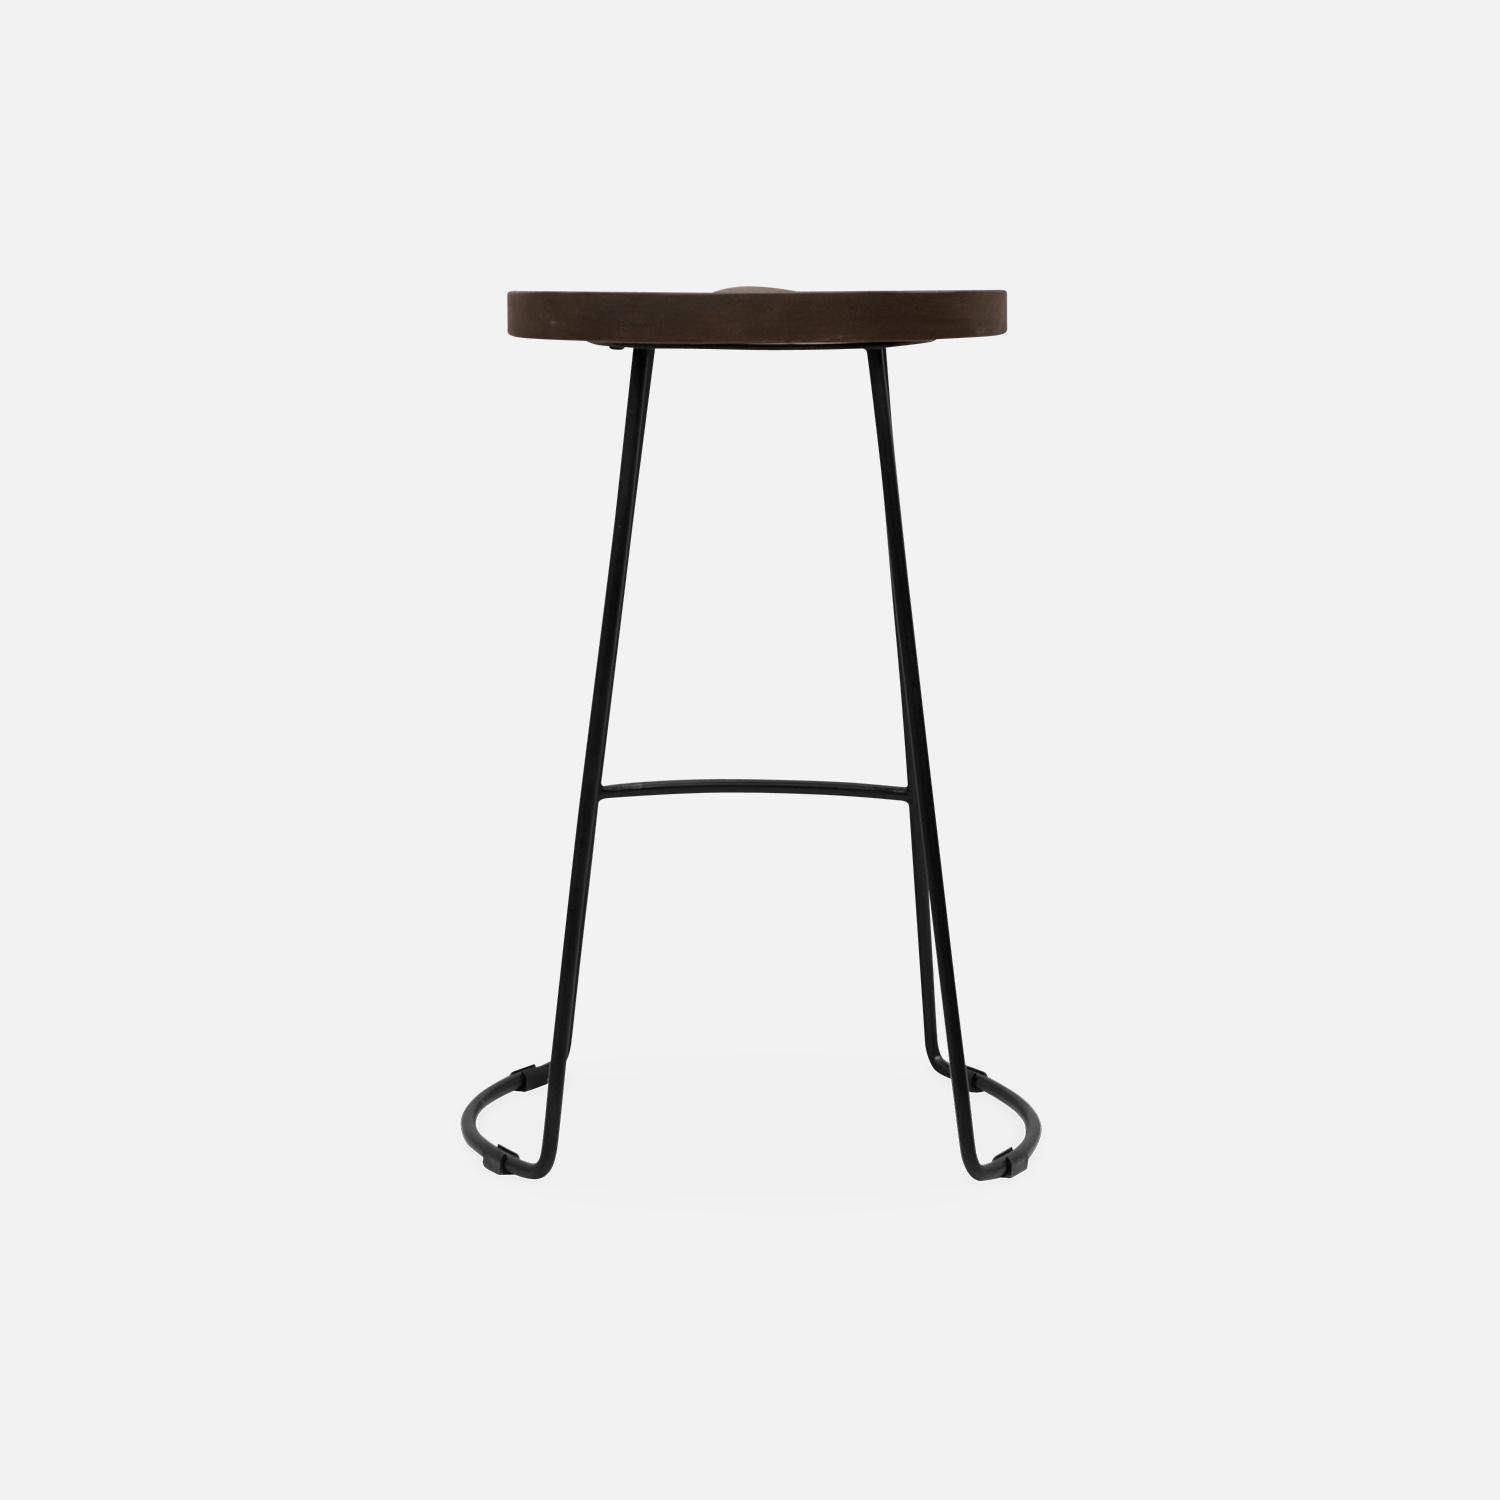 Pair of industrial metal and wooden bar stools, 44x36x65cm, Jaya, Light Walnut, Mango wood seat, black metal legs,sweeek,Photo7